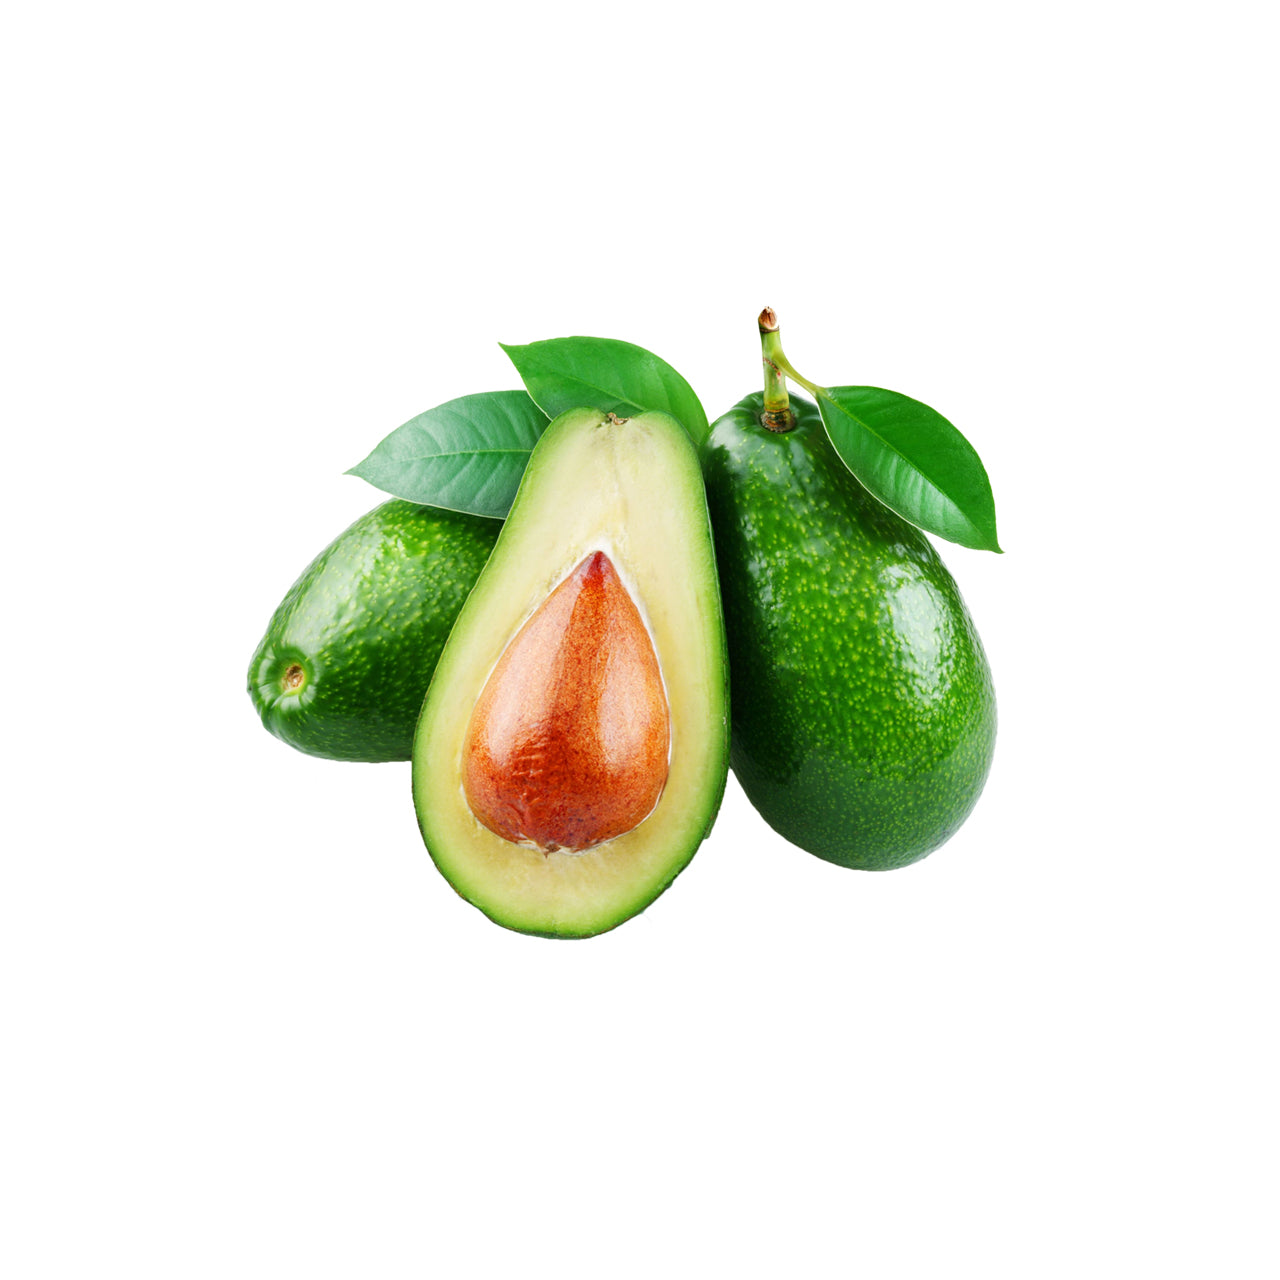 Avocado Oil Organic